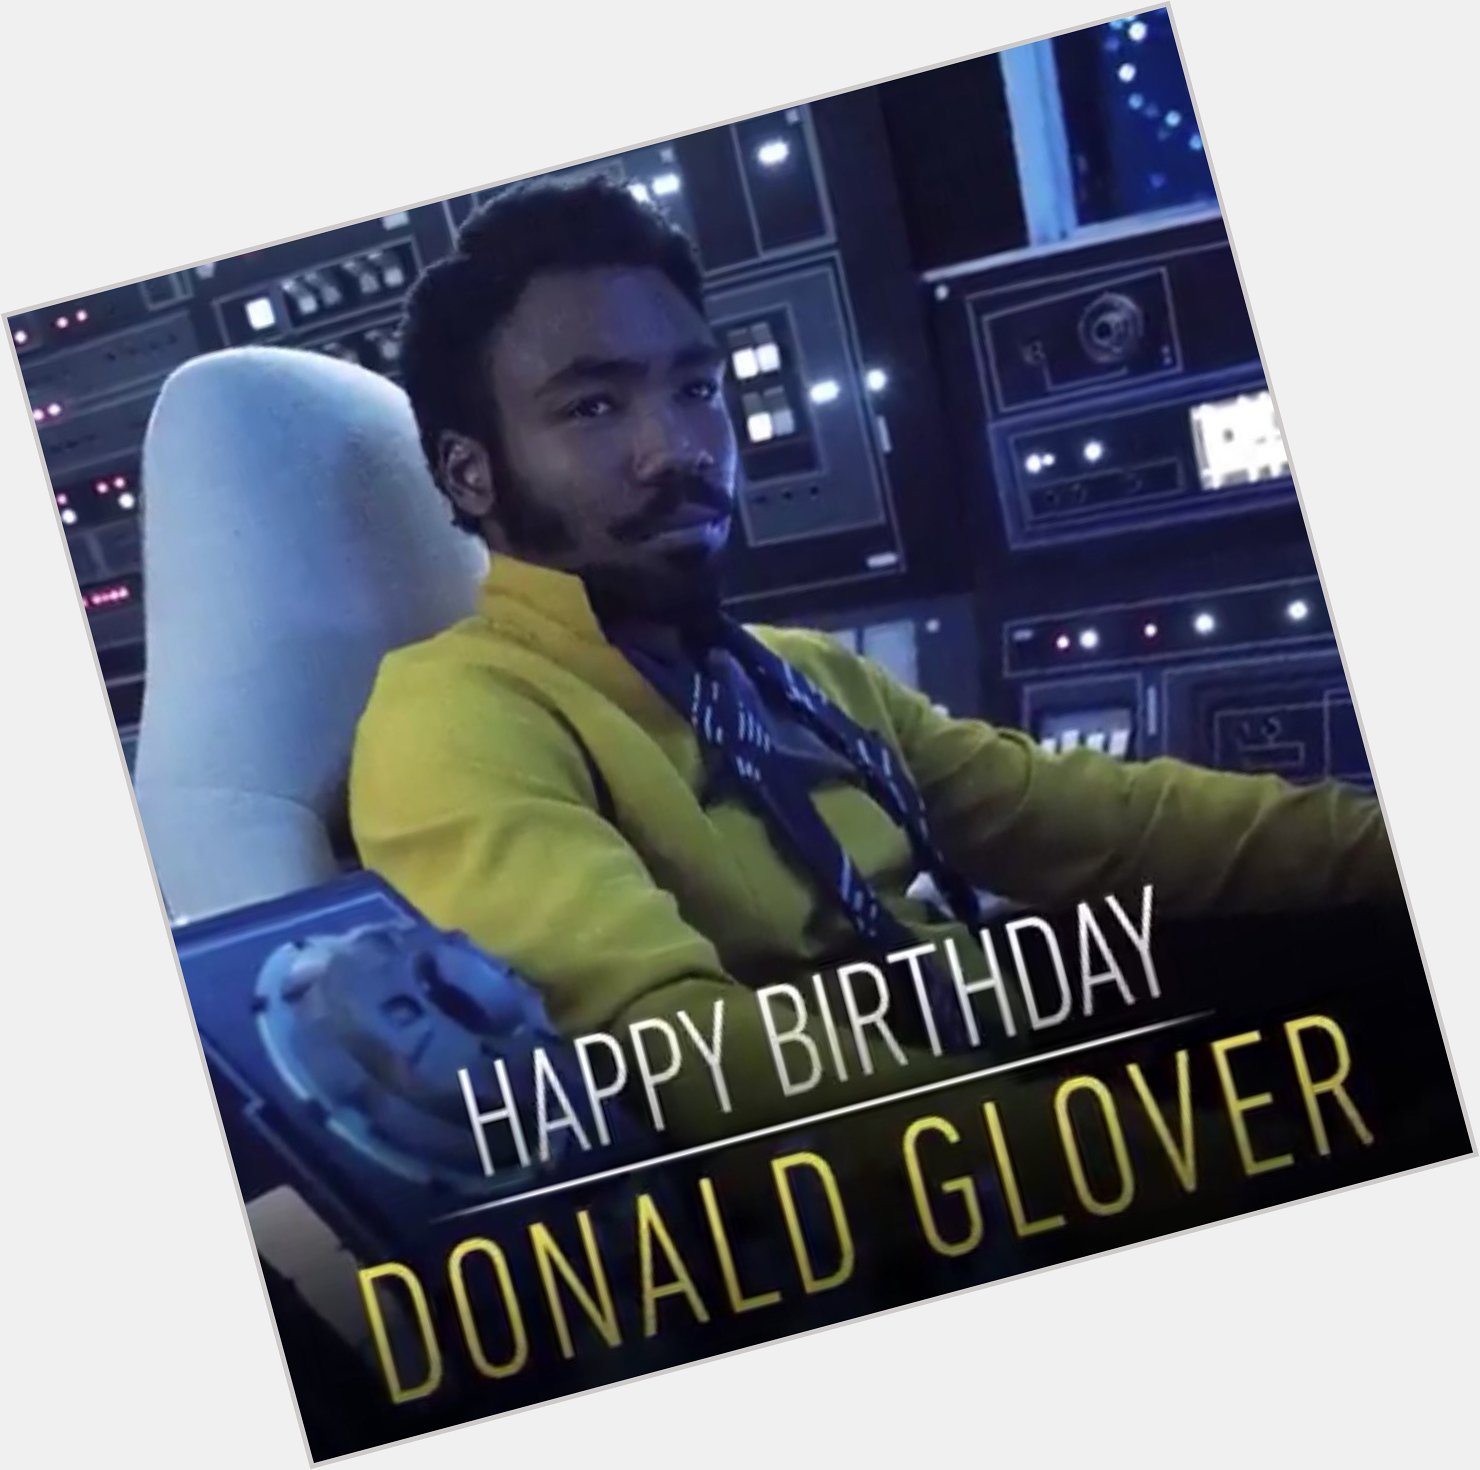 Happy Birthday Donald Glover        